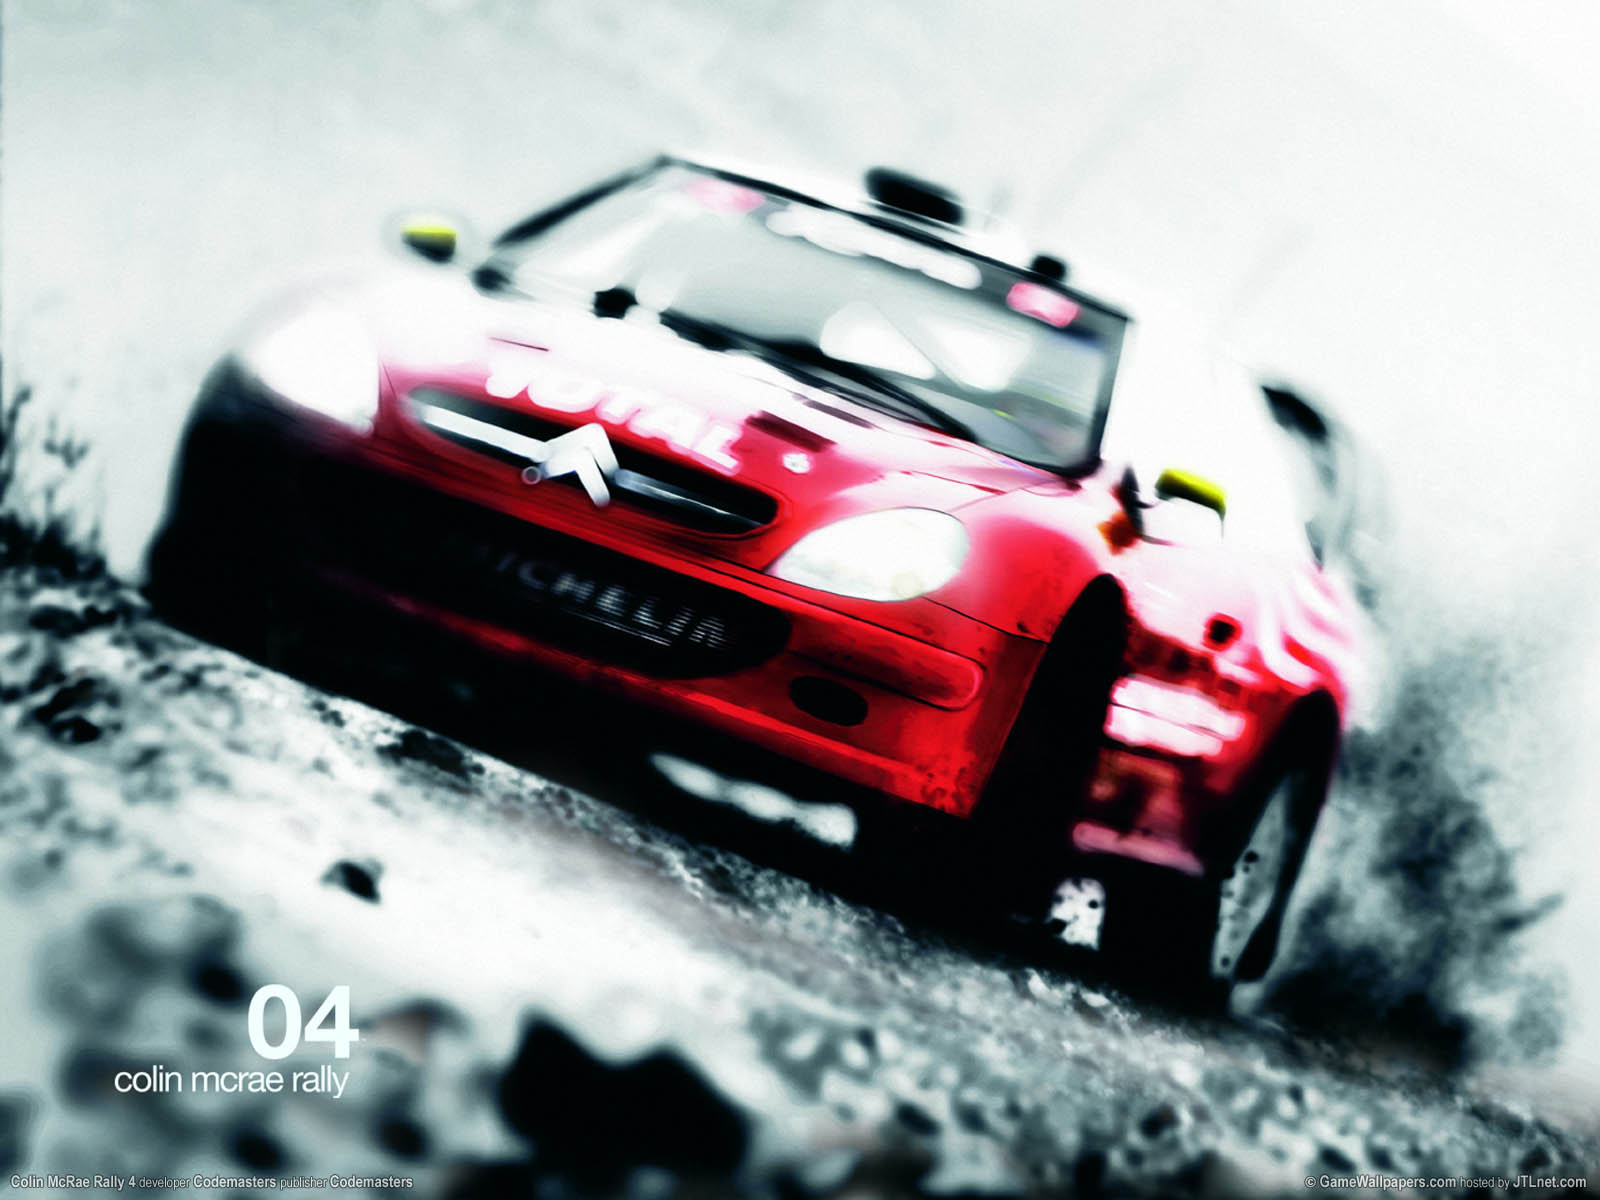 Colin McRae Rally 4 wallpaper 01 1600x1200